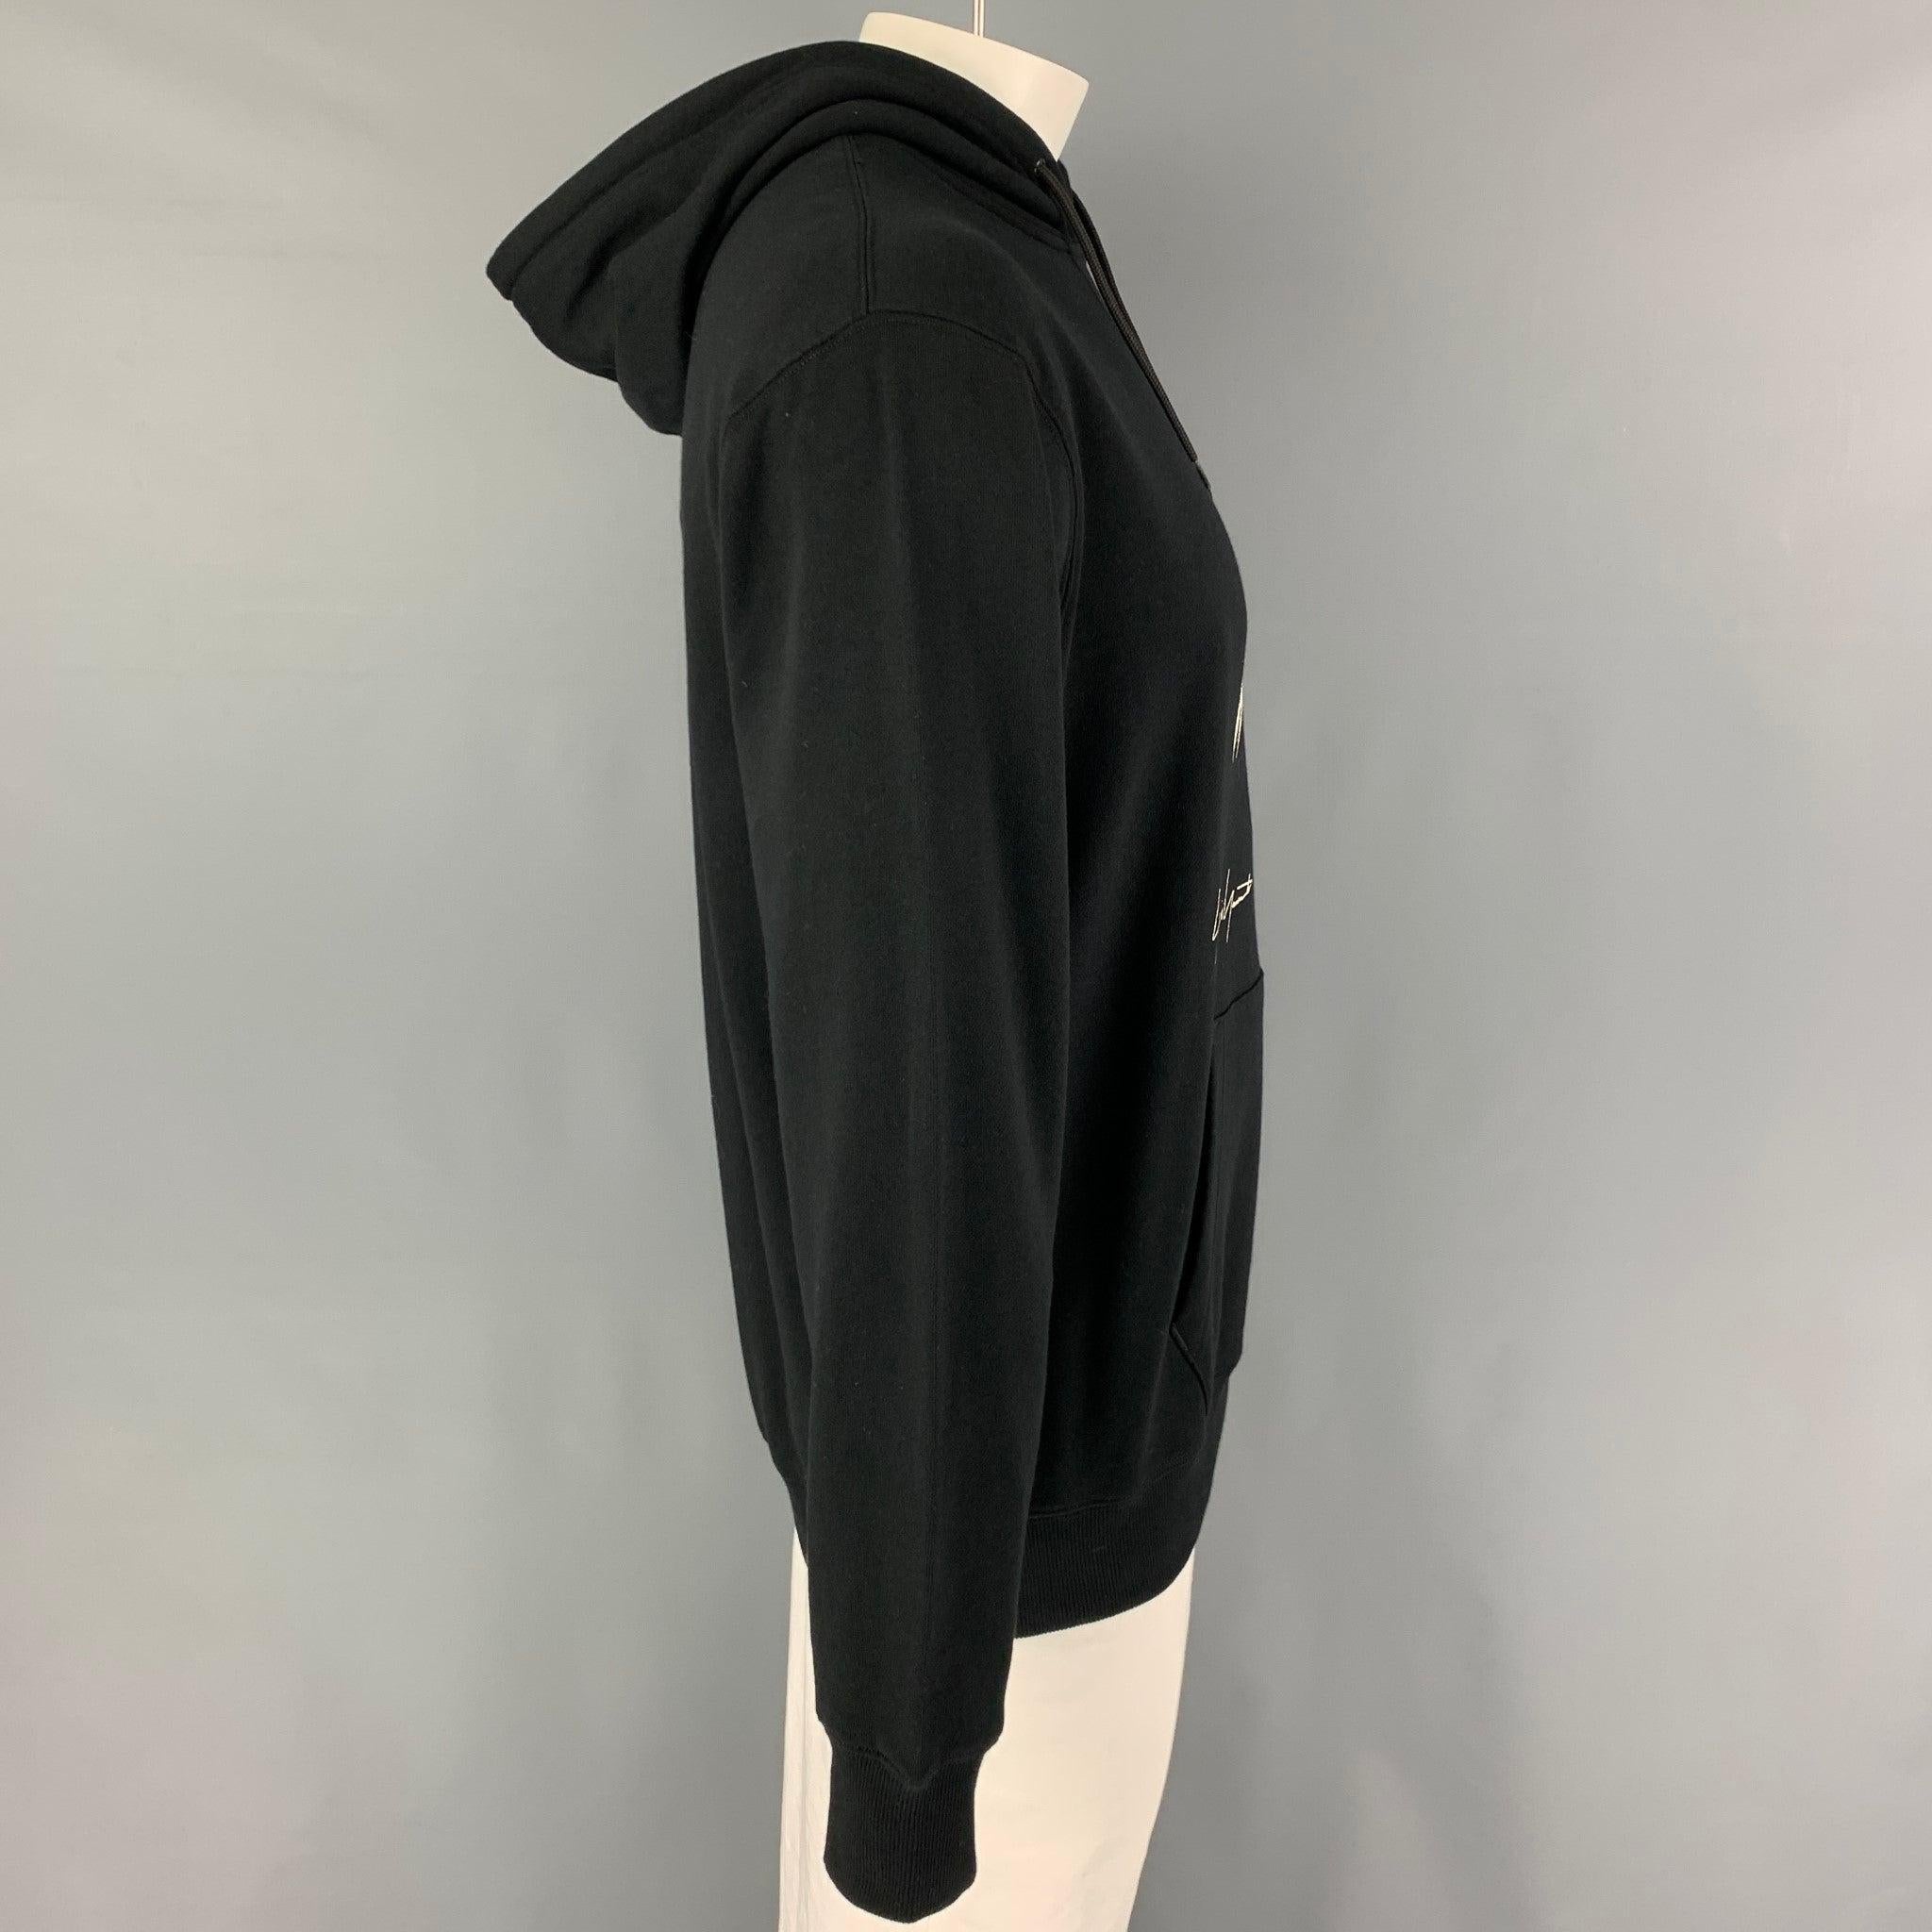 YOHJI YAMAMOTO x NEW ERA Size L Black White Graphic Cotton Hoodie Sweatshirt In Excellent Condition For Sale In San Francisco, CA